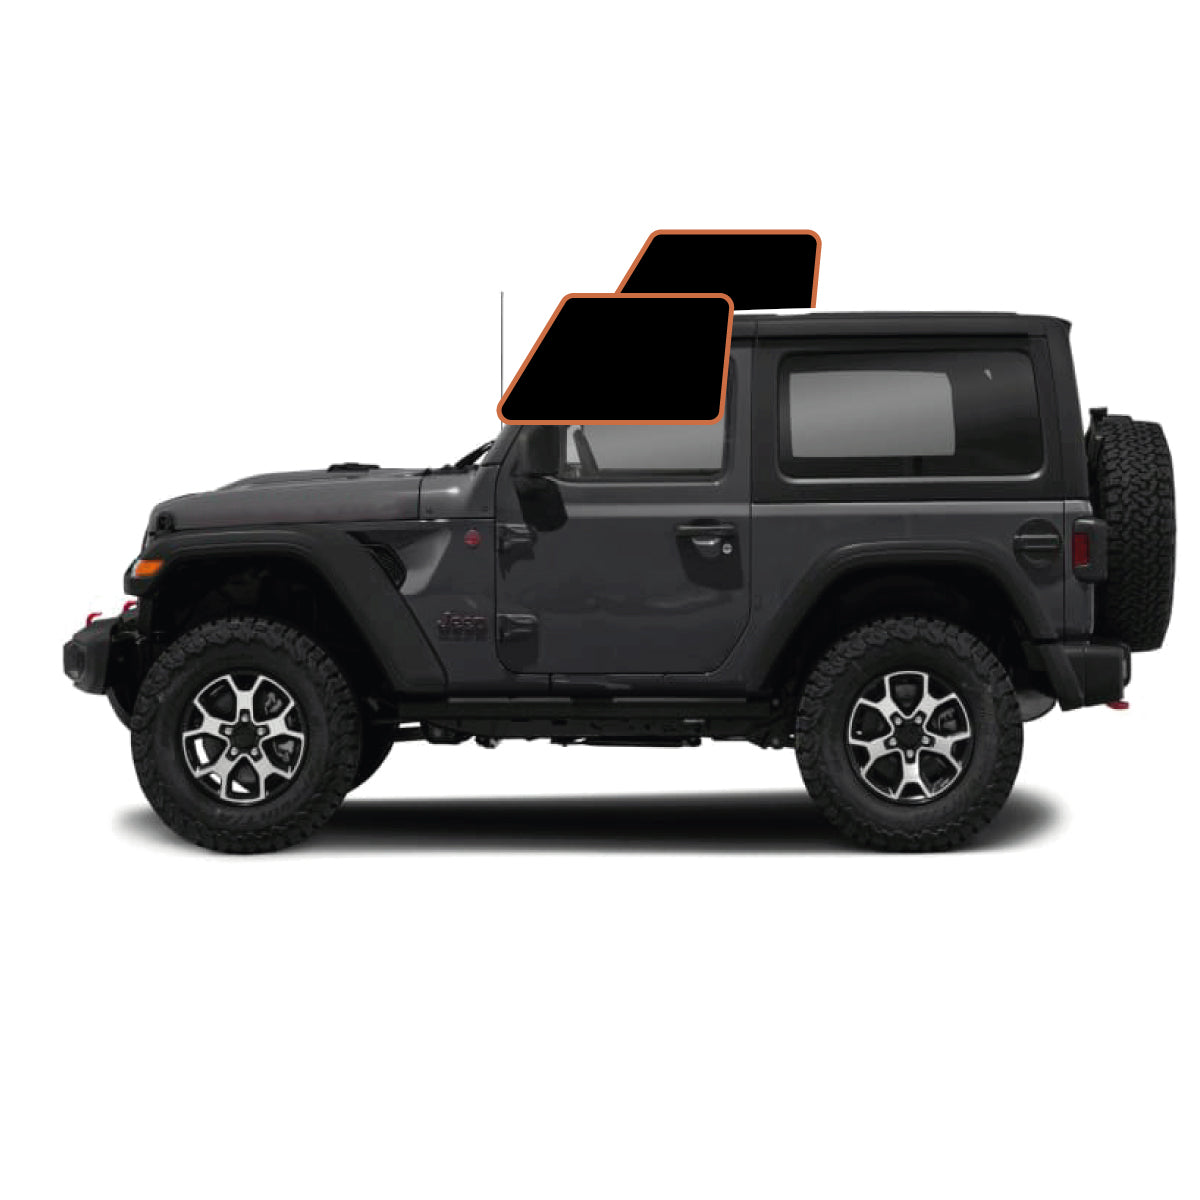 MotoShield Pro Premium Professional 2mil Precut Ceramic Window Tint Film for 2011-2017 Jeep Wrangler 2 Door Hard Top — (Front Driver/Passenger 35%) + Lifetime Warranty